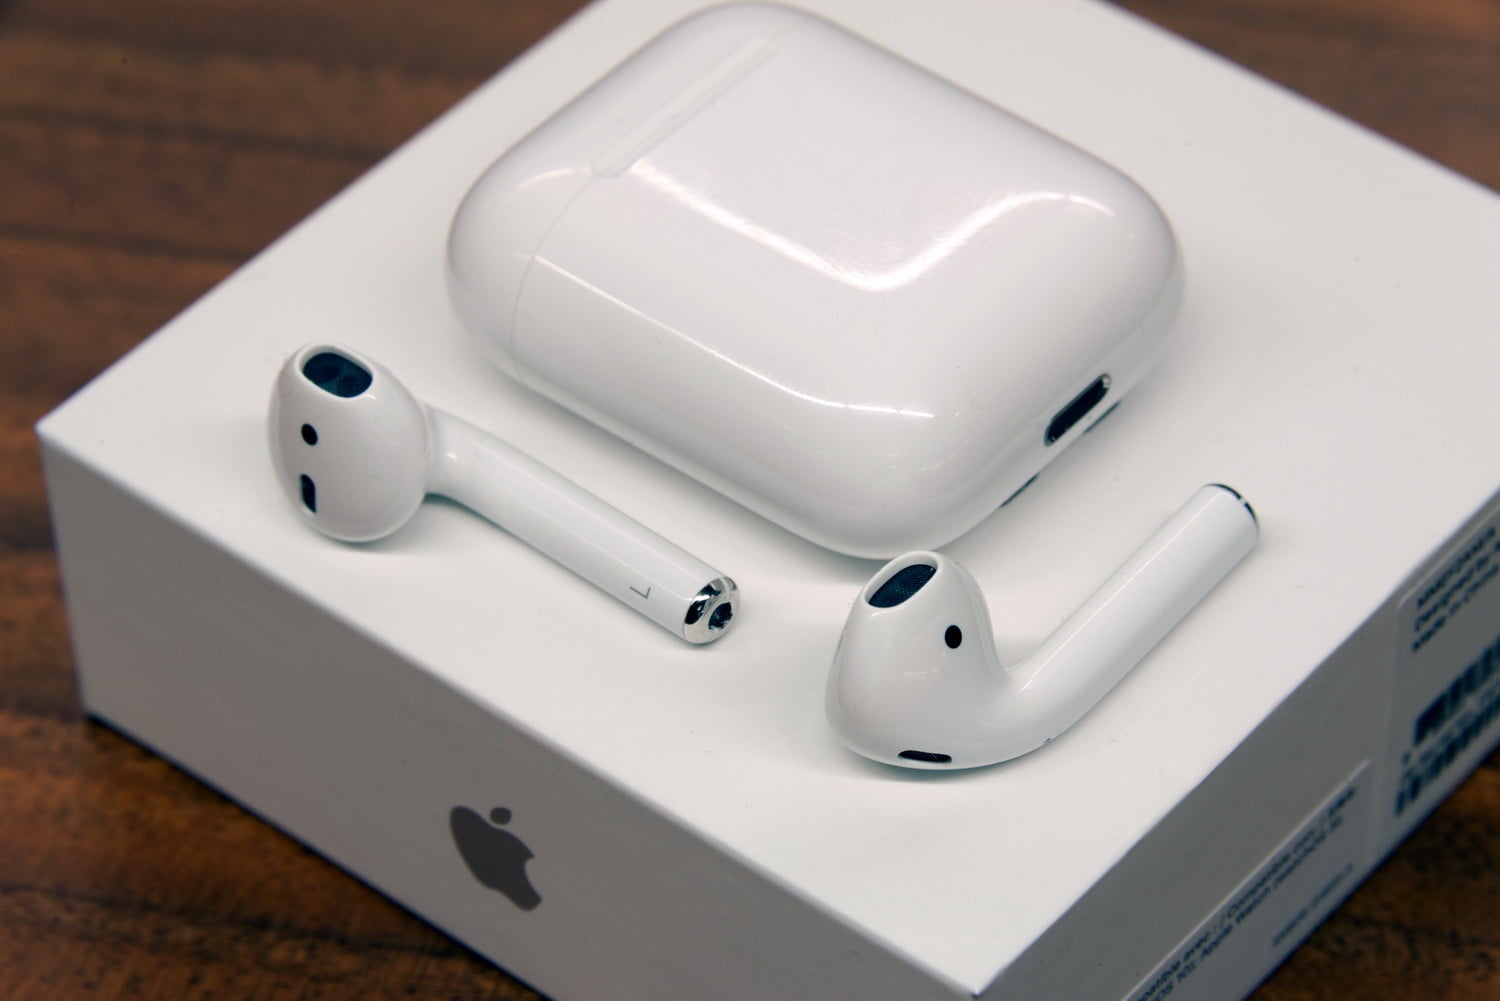 Apple AirPods ครองส่วนแบ่งการตลาดของหูฟัง TWS มากที่สุดในปี 2019